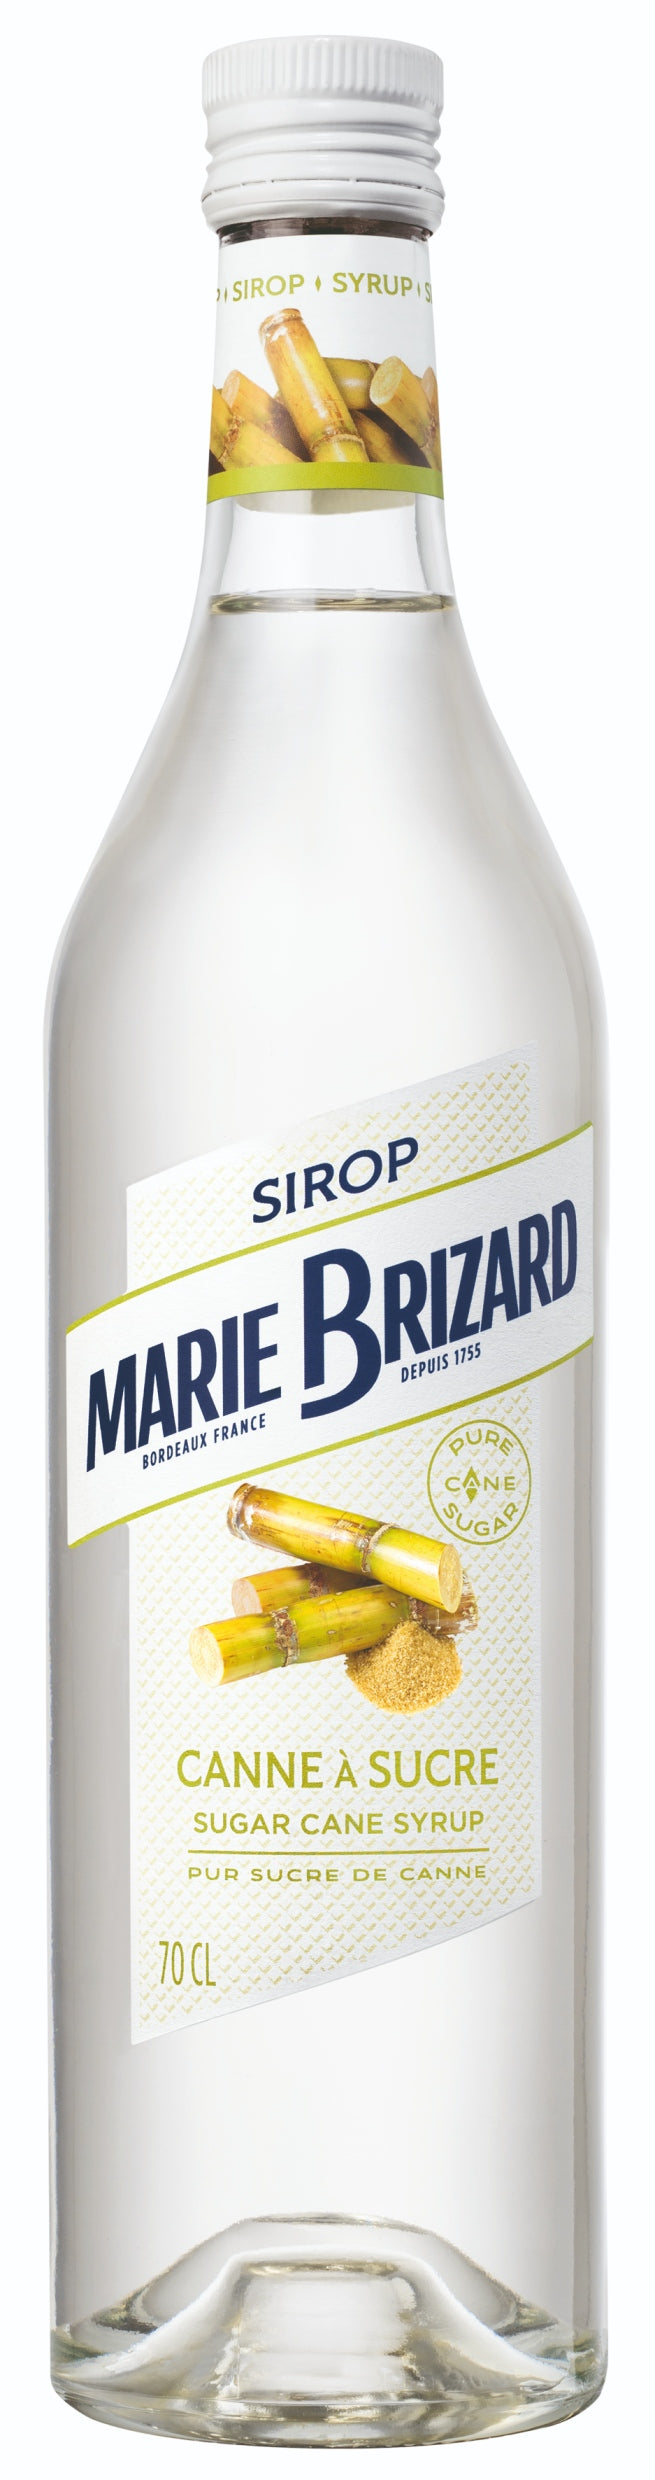 MARIE BRIZARD SIROP SUCRE DE CANNE 70CL